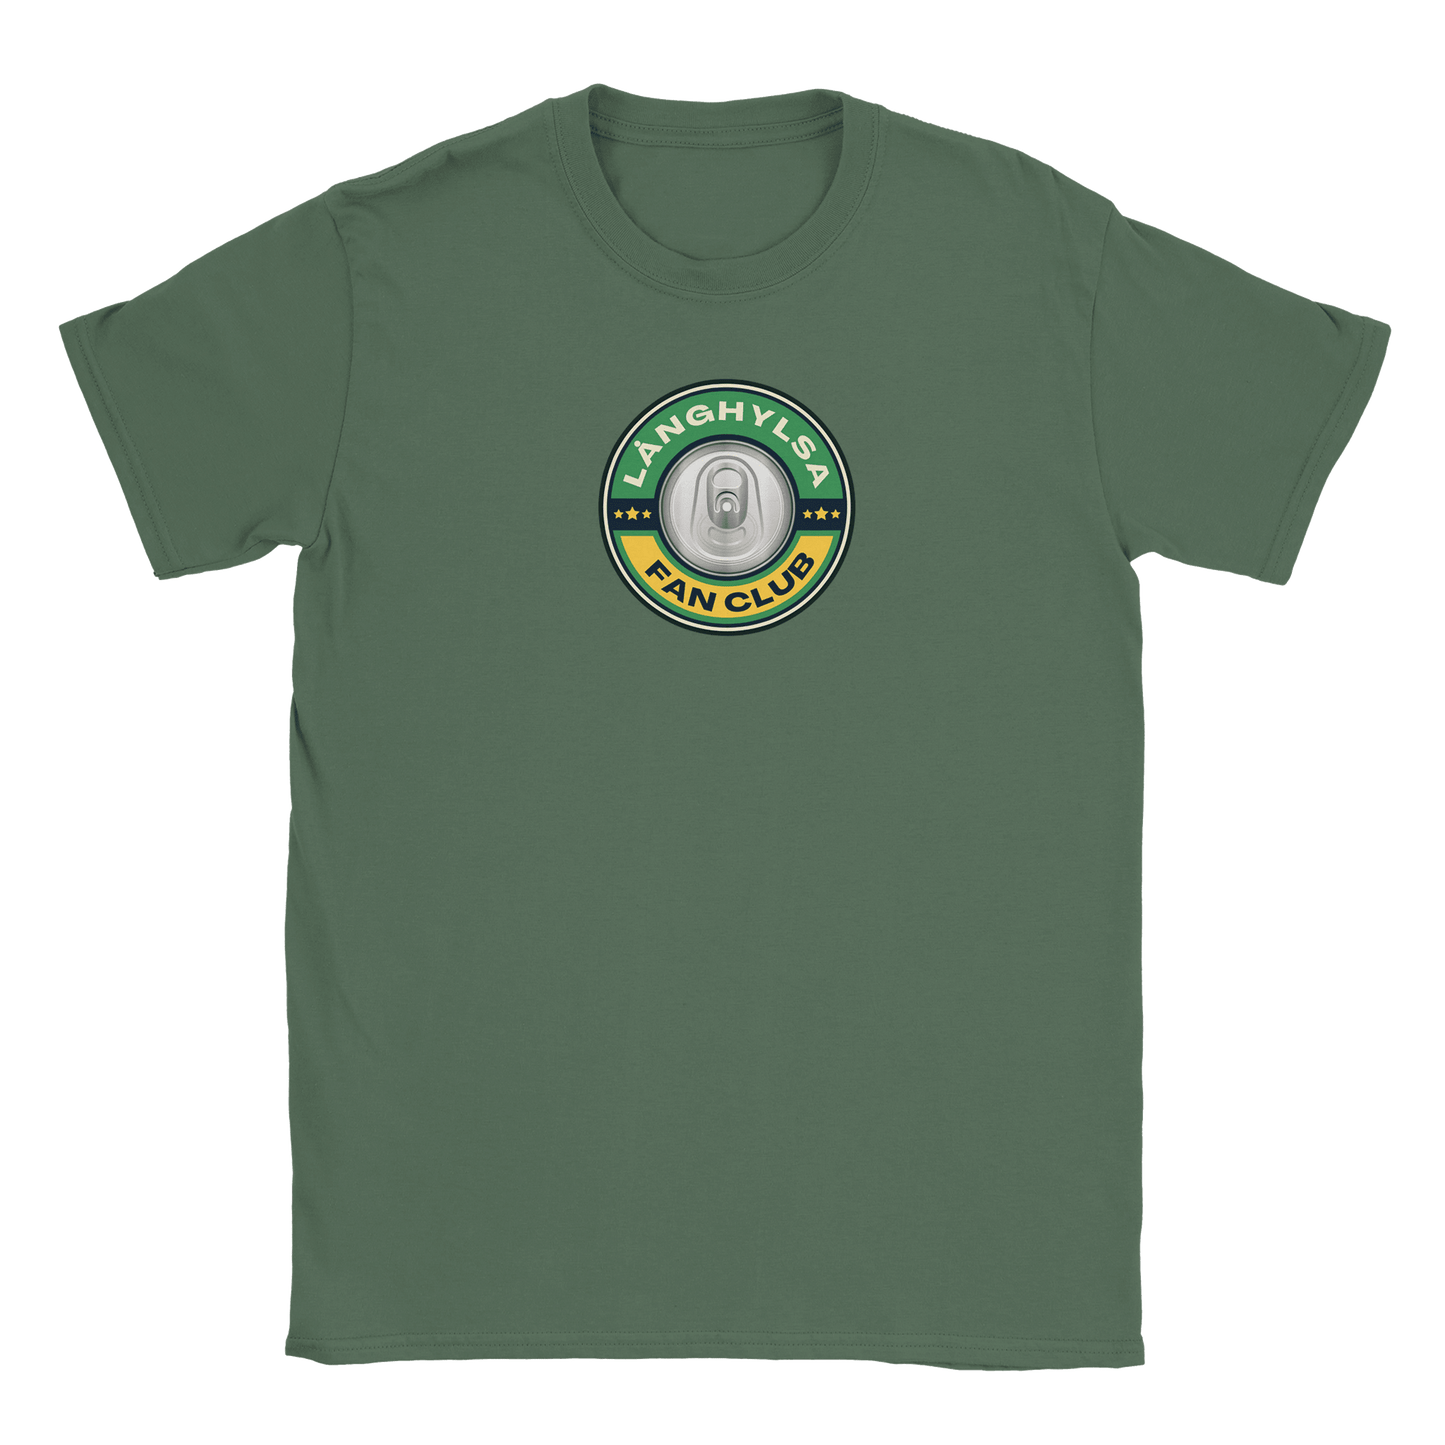 Långhylsa Fan Club - T-shirt Military Green